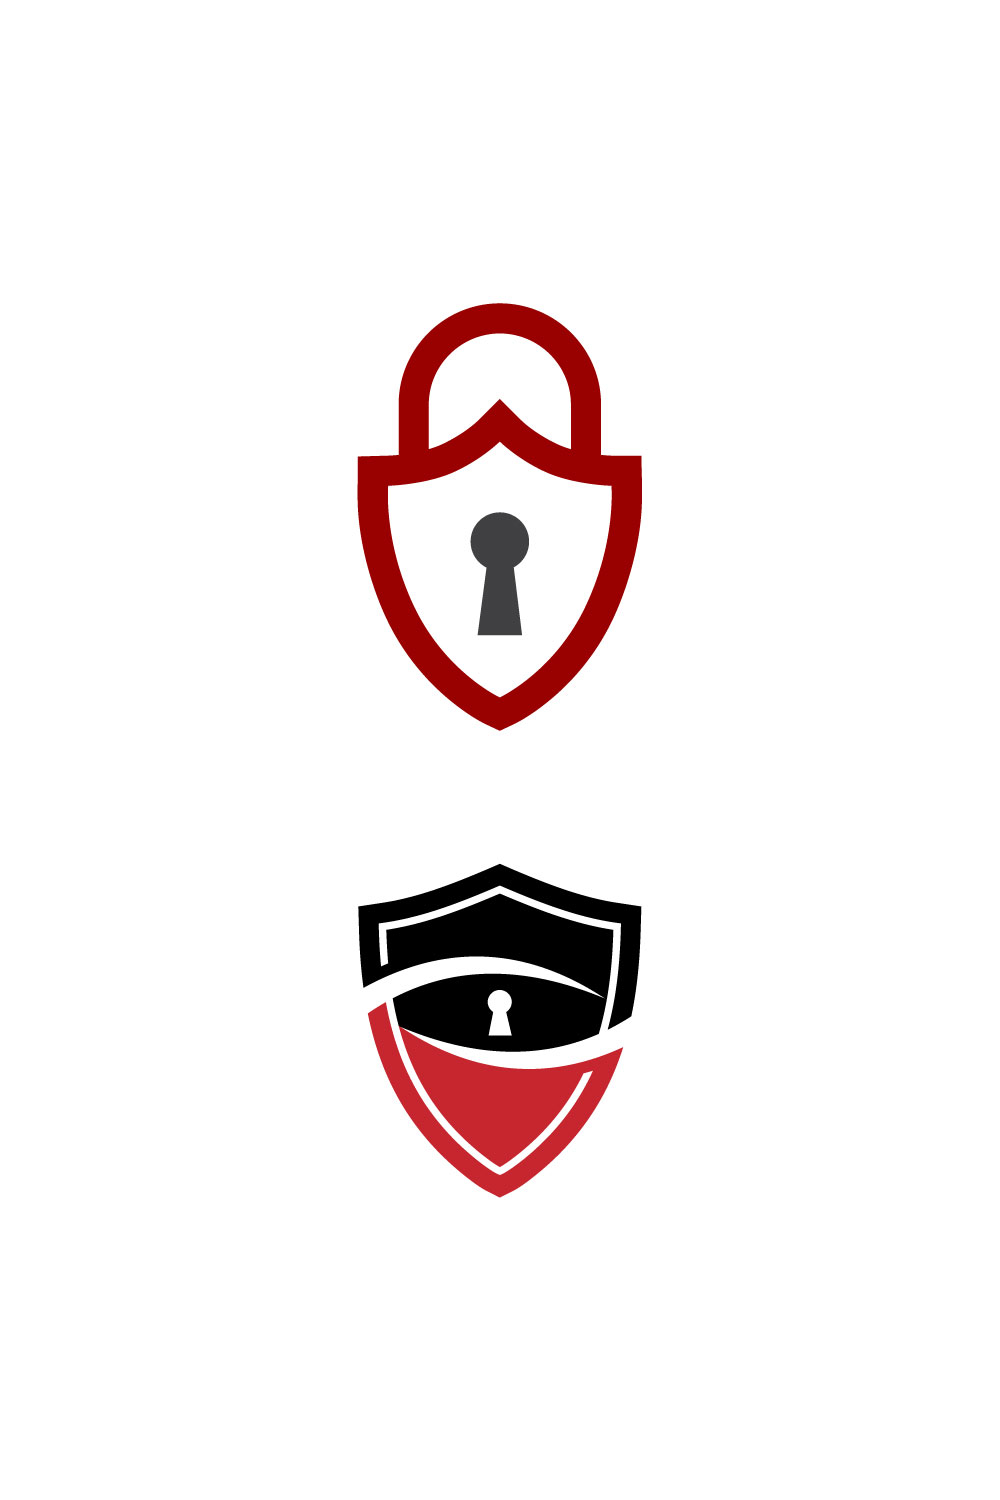 Shield Key Logo Vector pinterest image.